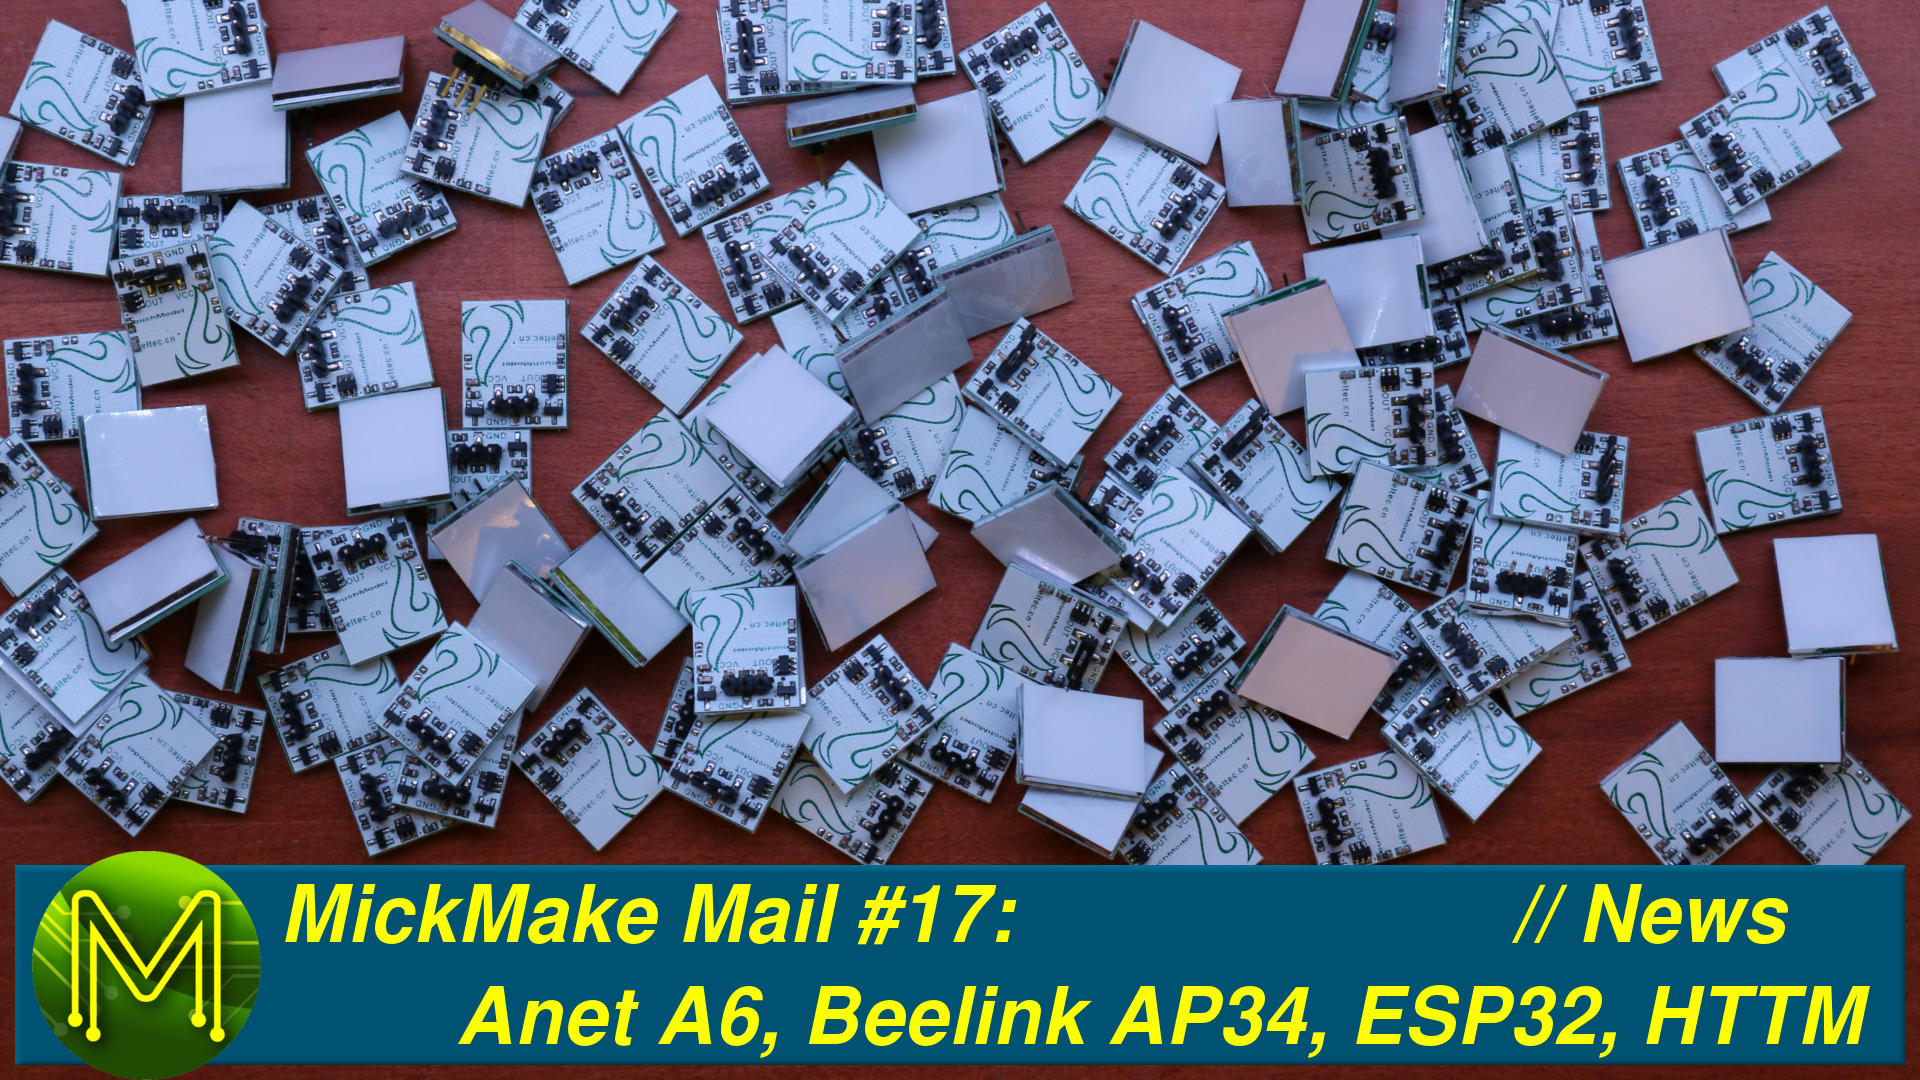 MickMake Mail #17: Anet A6, Beelink AP34, ESP32 again, HTTM